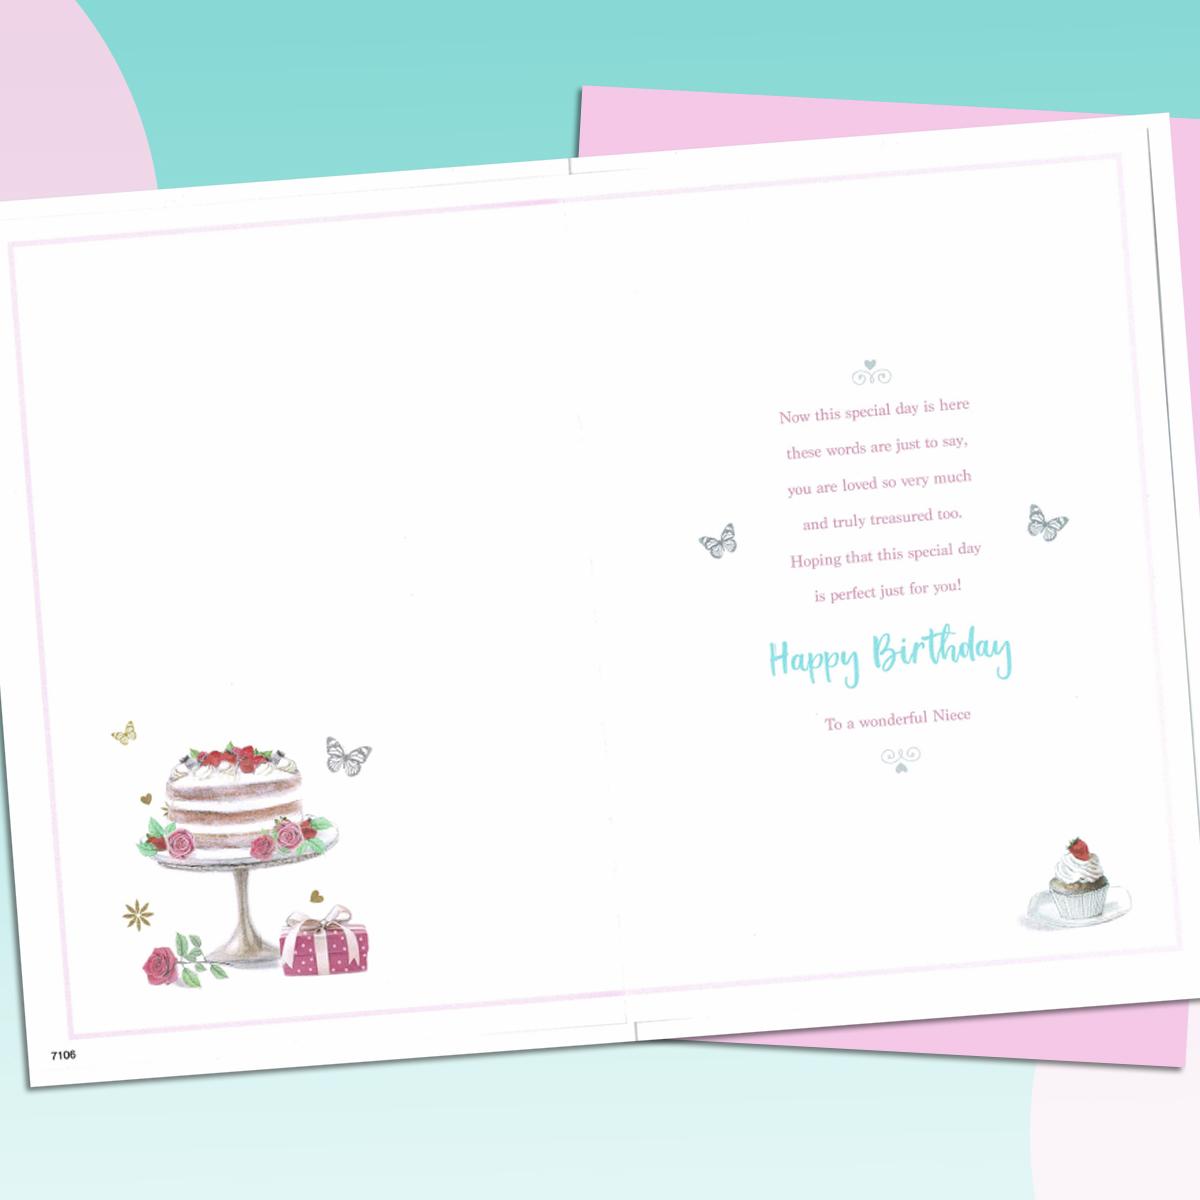 Niece Birthday Card Alongside Its Light Pink Envelope